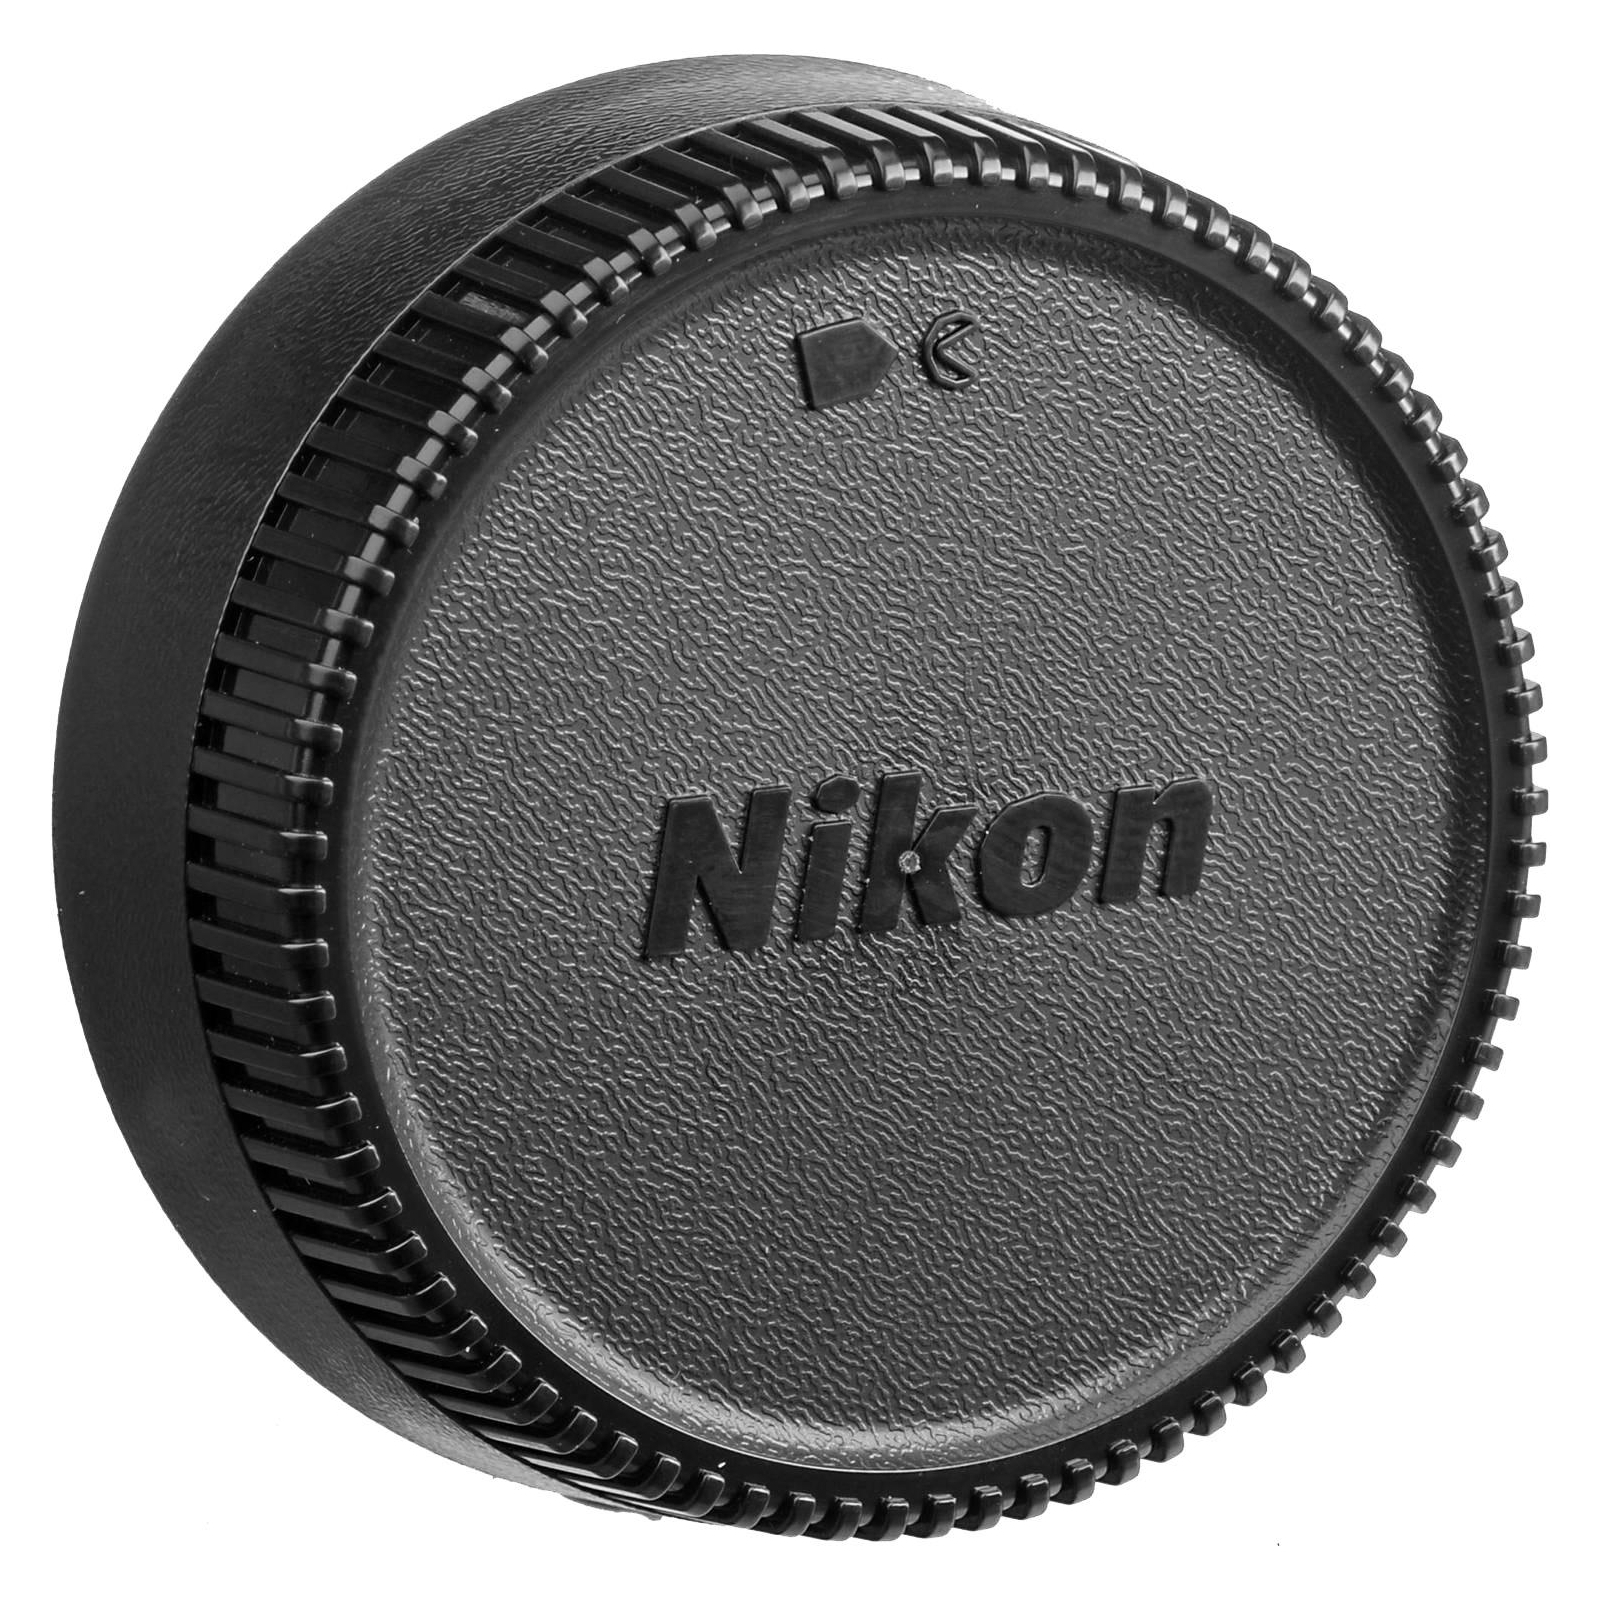 Объектив Nikon 10-24mm f/3.5-4.5G DX AF-S (JAA804DA) изображение 5